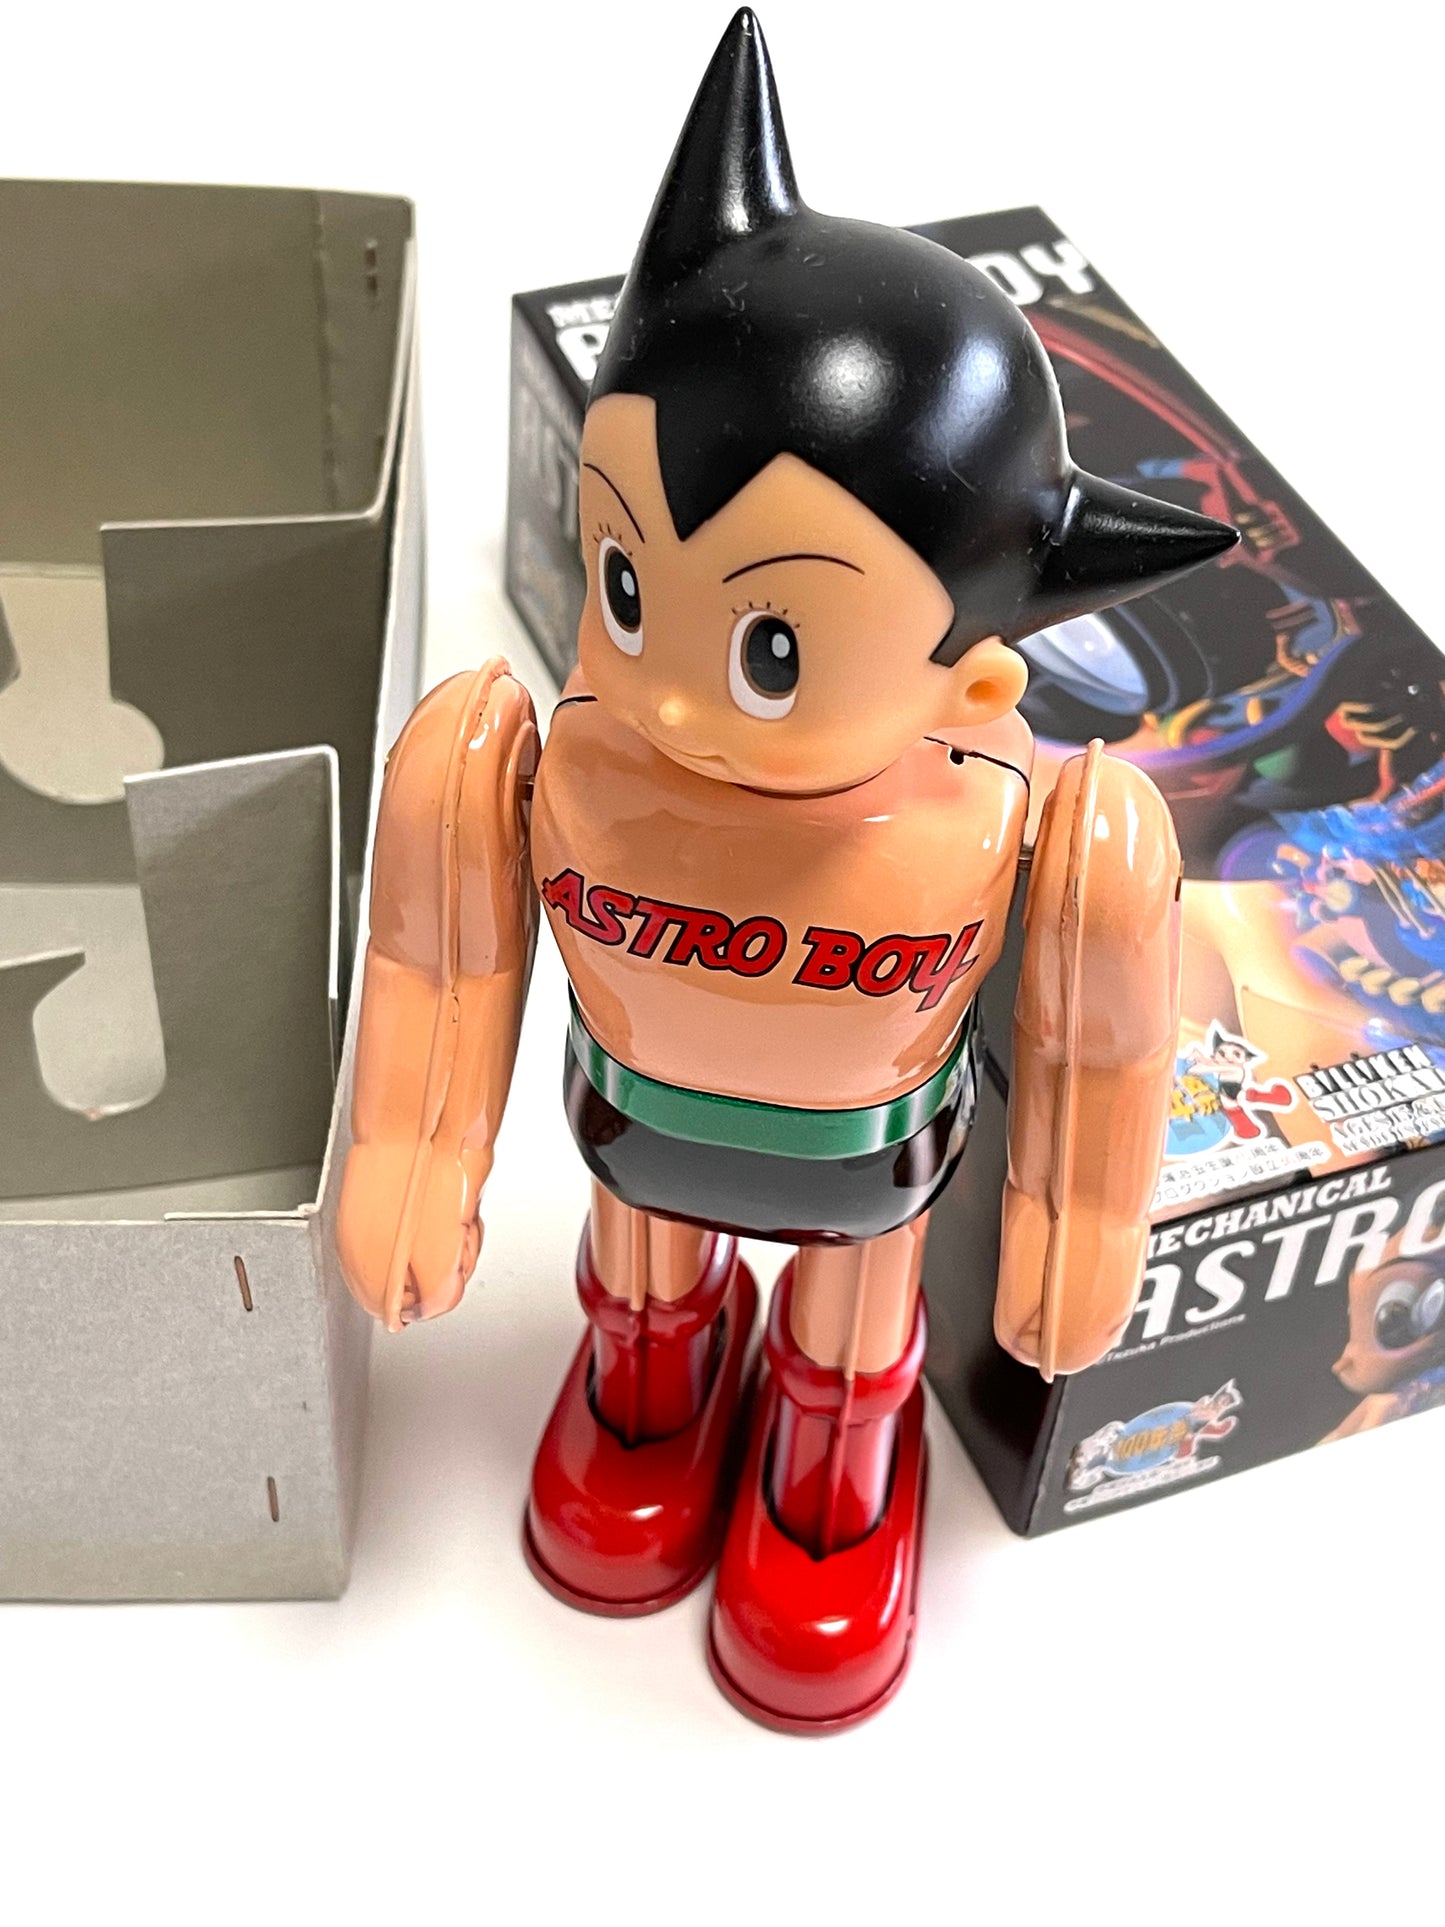 Billiken Shokai Japanese Retro Anime Astroboy Tezuka Osamu Productions Tetsuwan Atom Mechanical Action Tin Toy